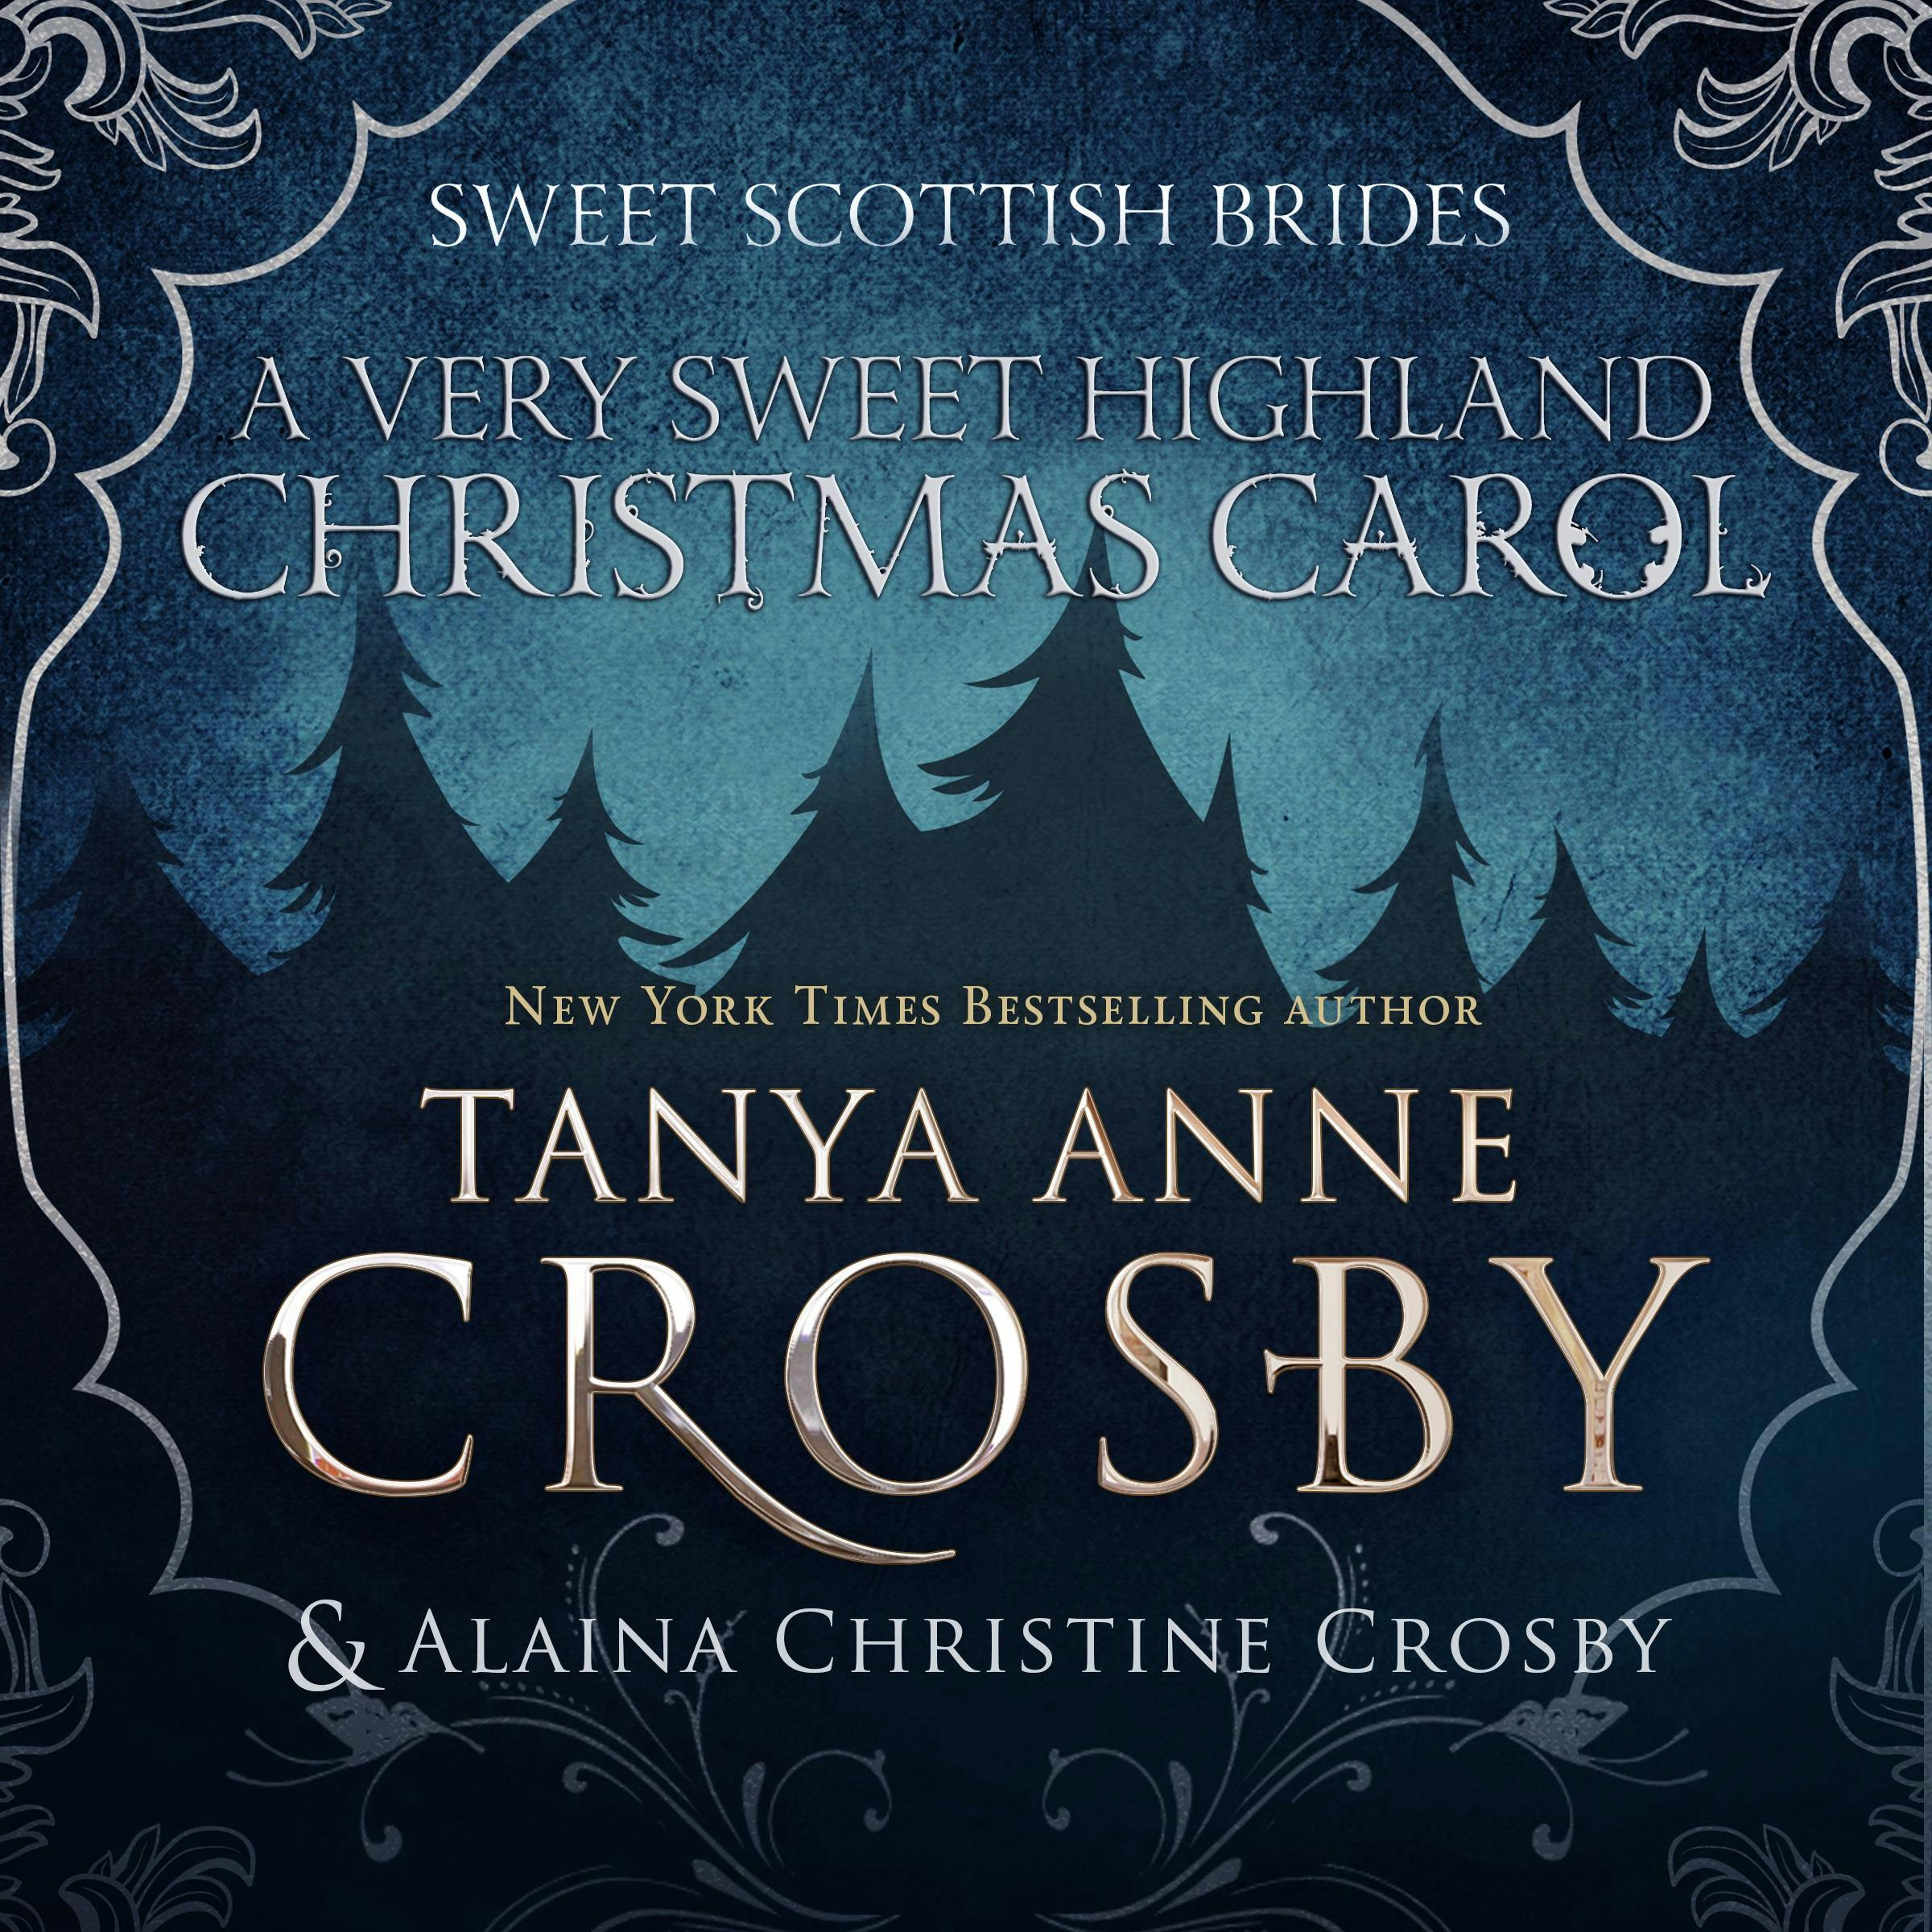 A Very Sweet Highland Christmas Carol - Tanya Anne Crosby, Alaina Christine Crosby